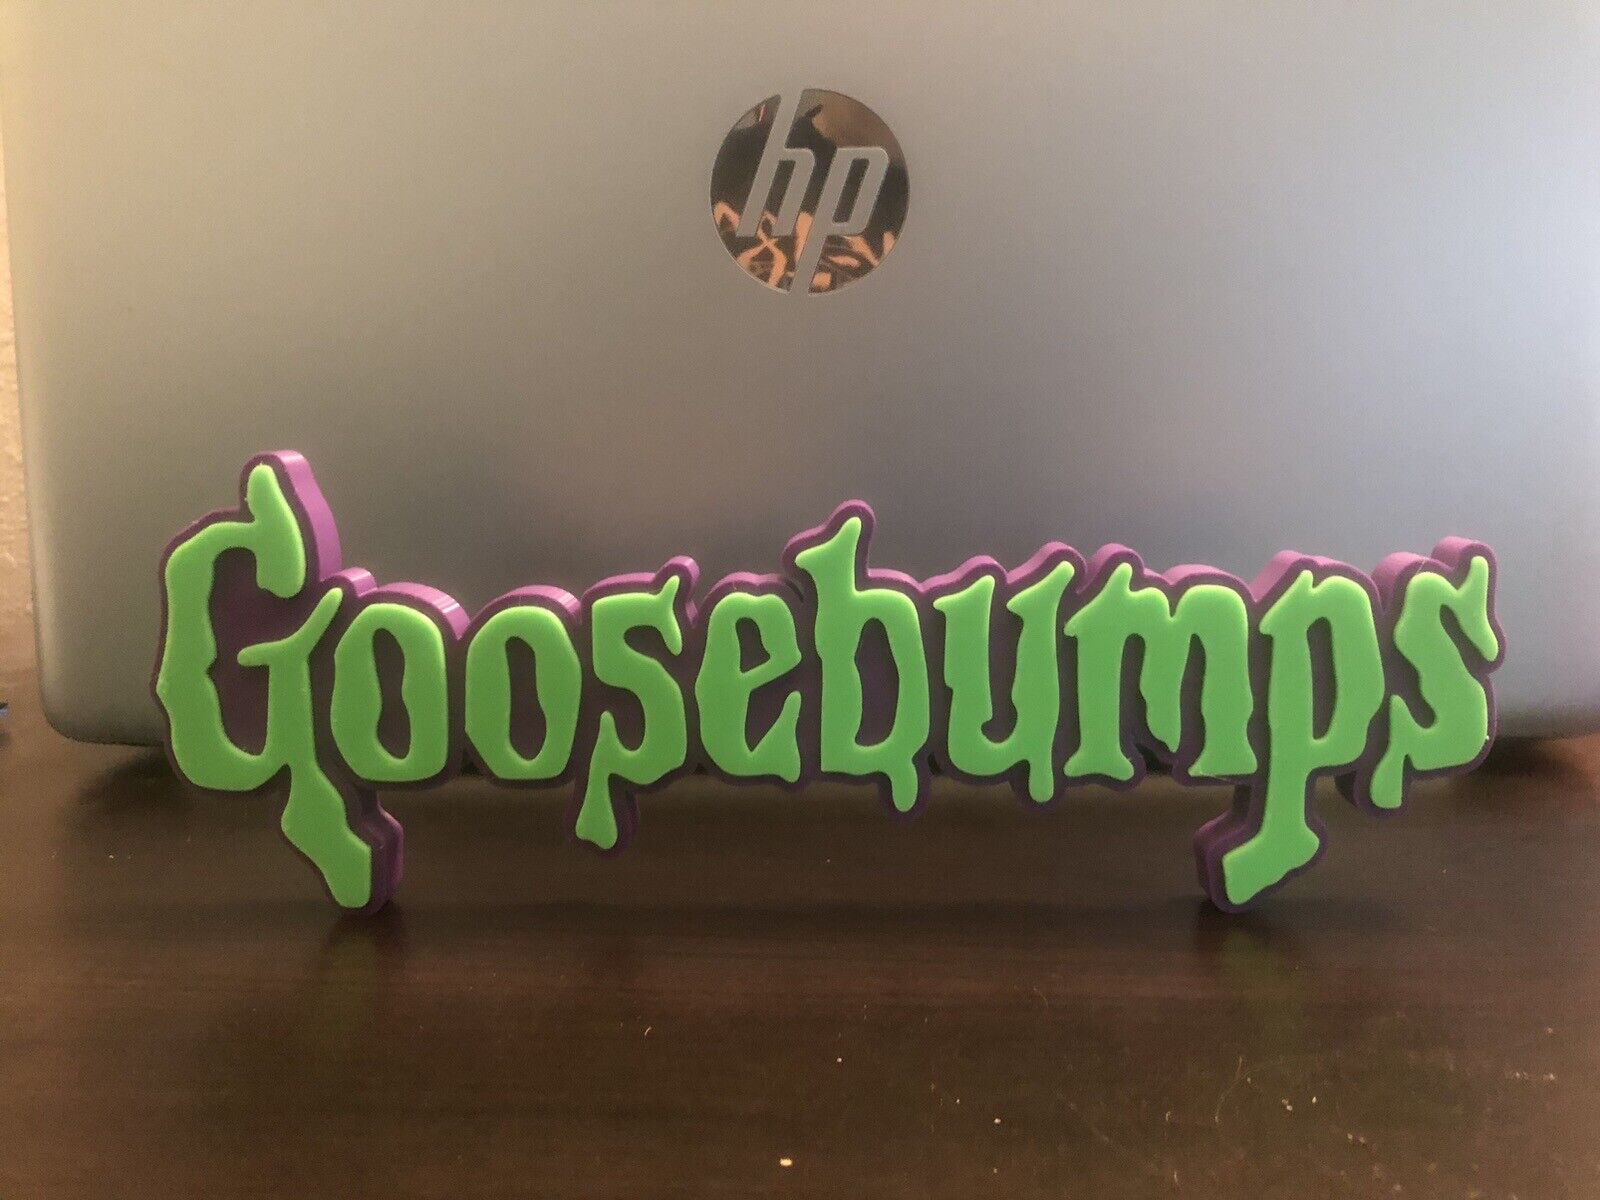 Goosebumps logo/shelf display